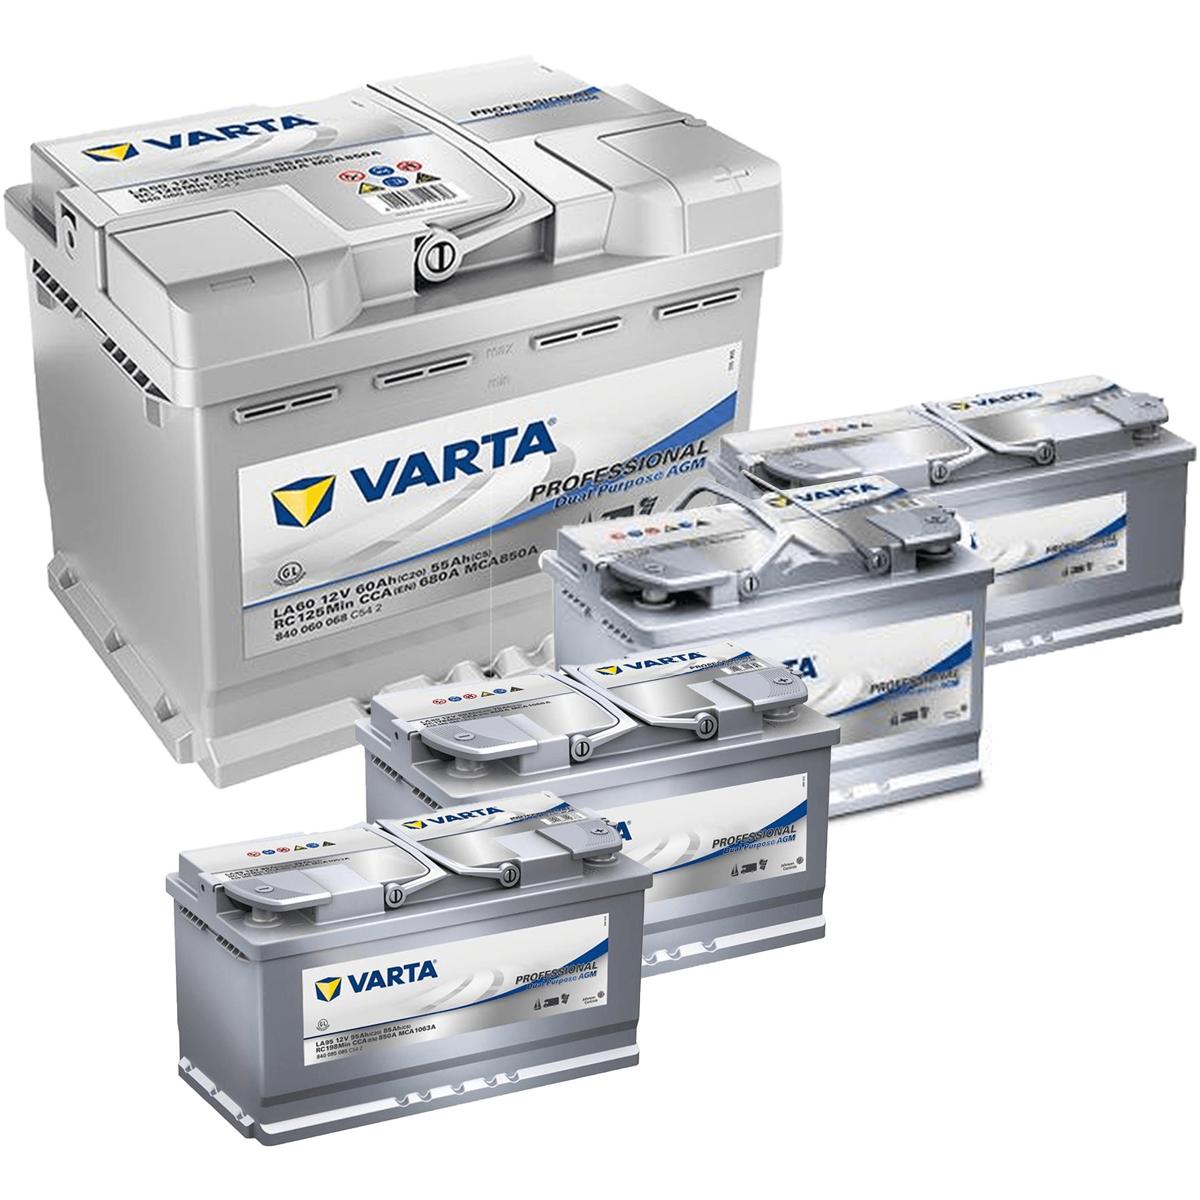 VARTA Professional Dual Purpose AGM Batterie für Caravans, Wohnmobile &  Boote – 12V 95Ah 850A (LA 95) – Versorgerbatterie & Starterbatterie in einem